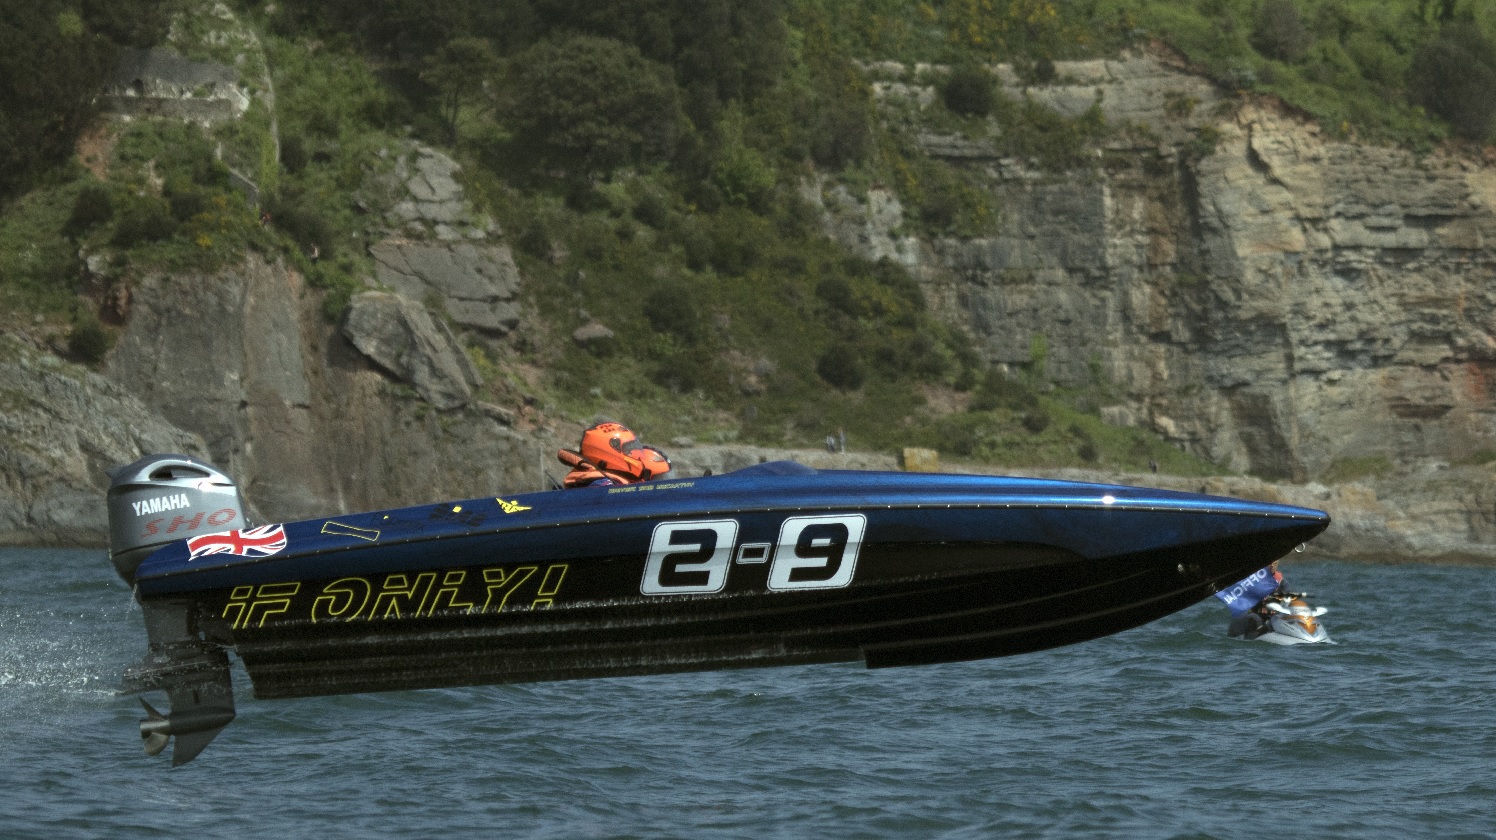 Racing the dream boat: the Bernico F3 Xtreme